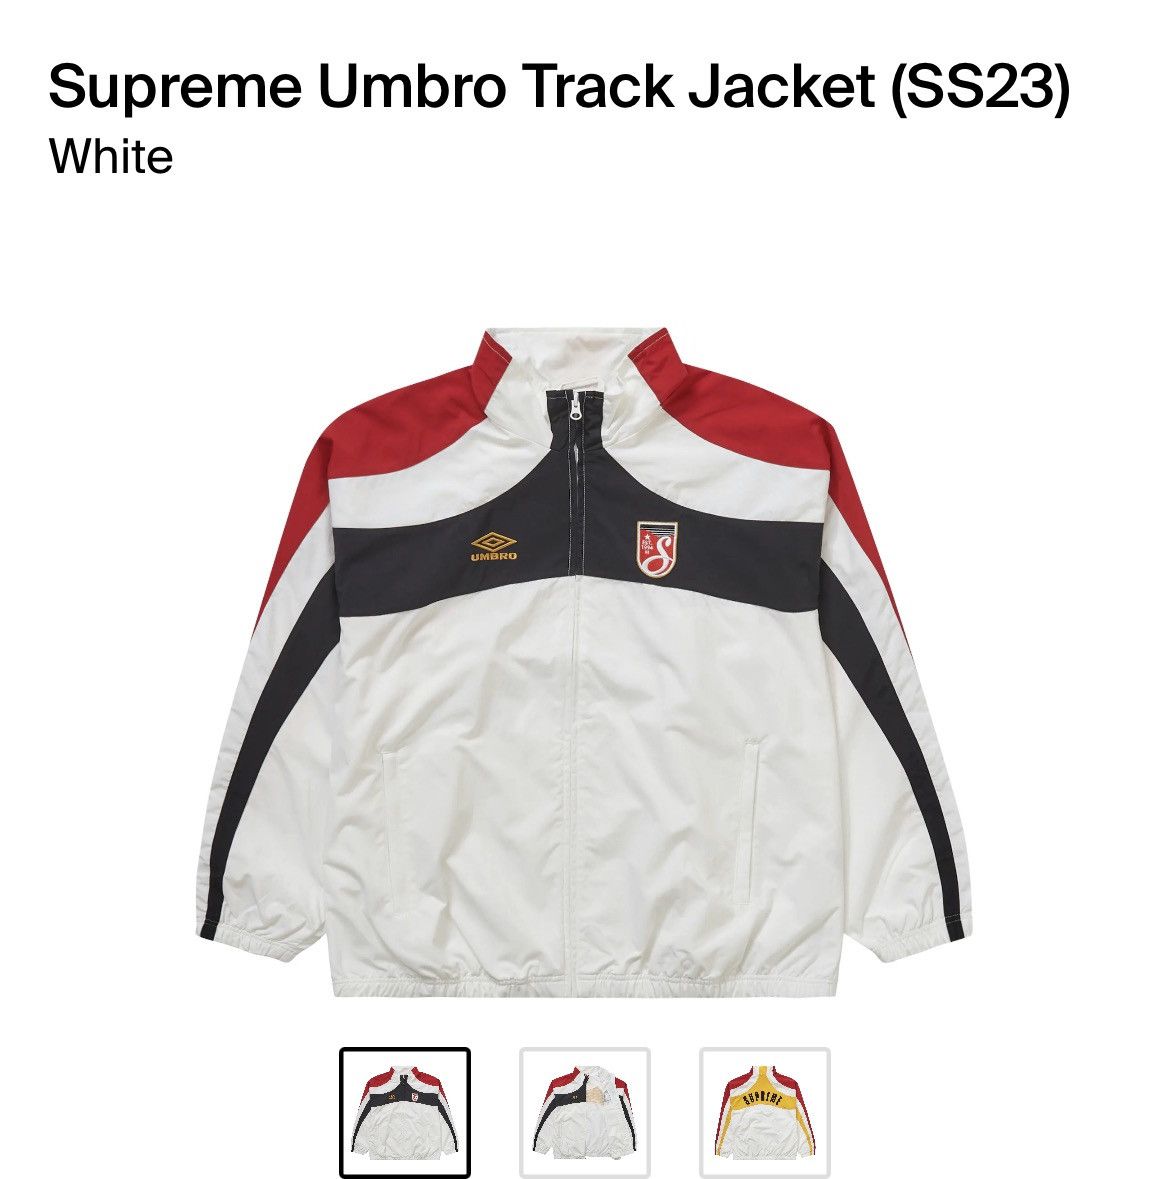 Supreme umbro track jacket | Grailed